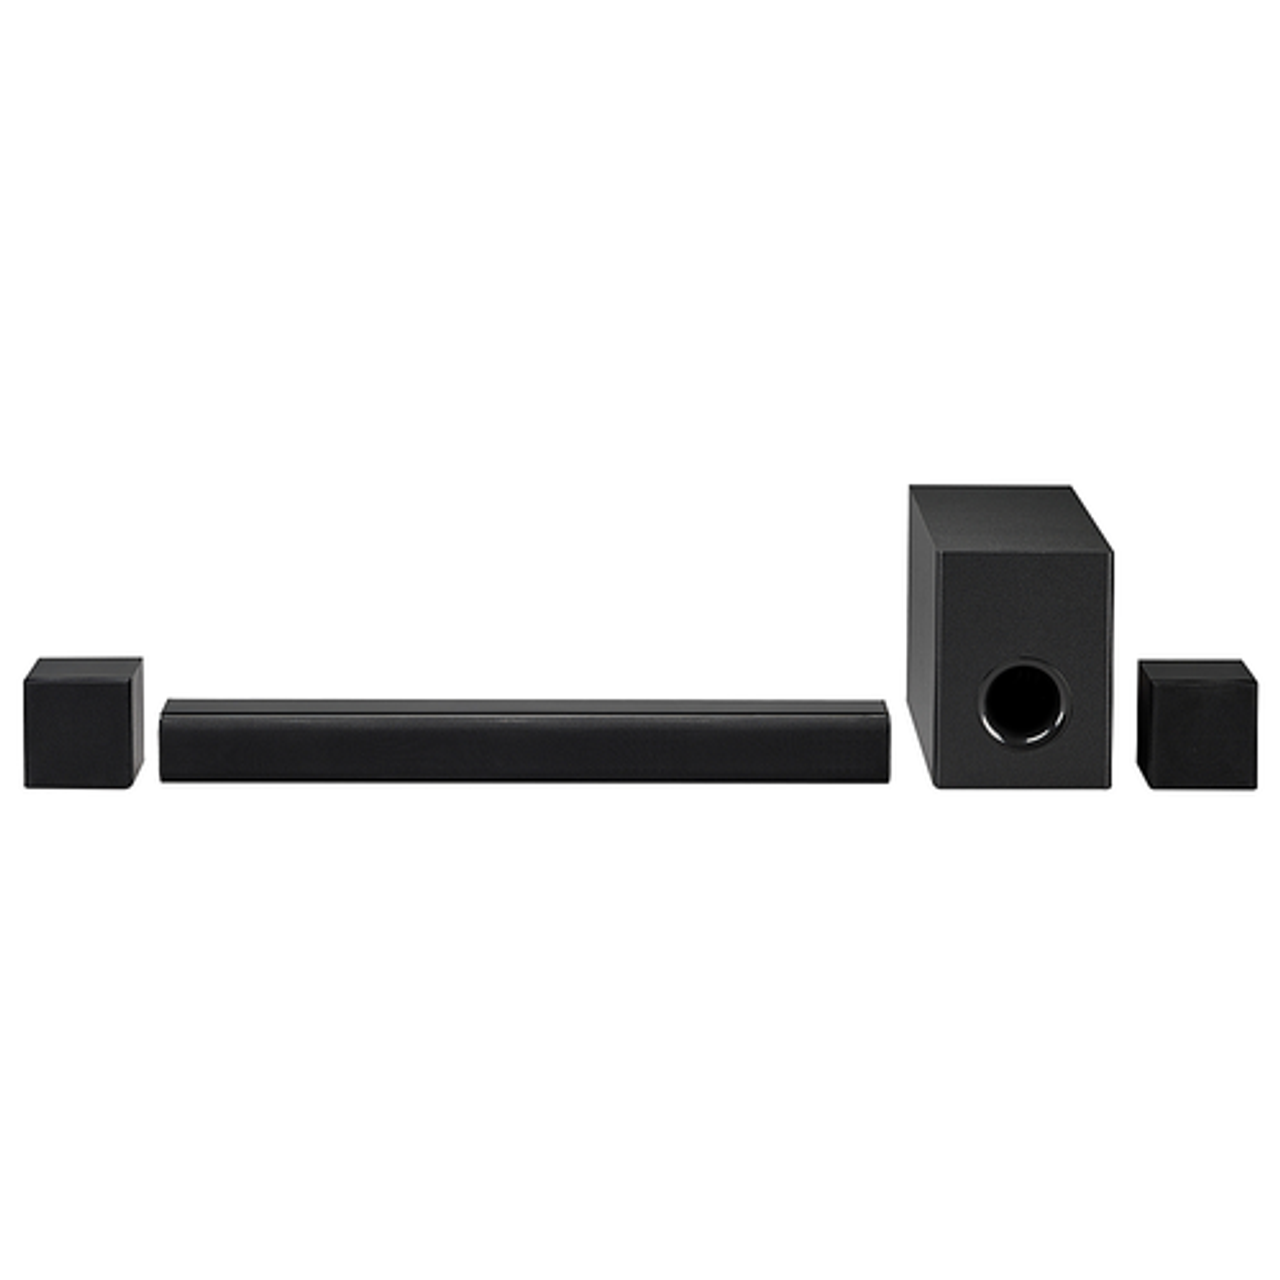 iLive Bluetooth Sound Bar Home Theater System - Black